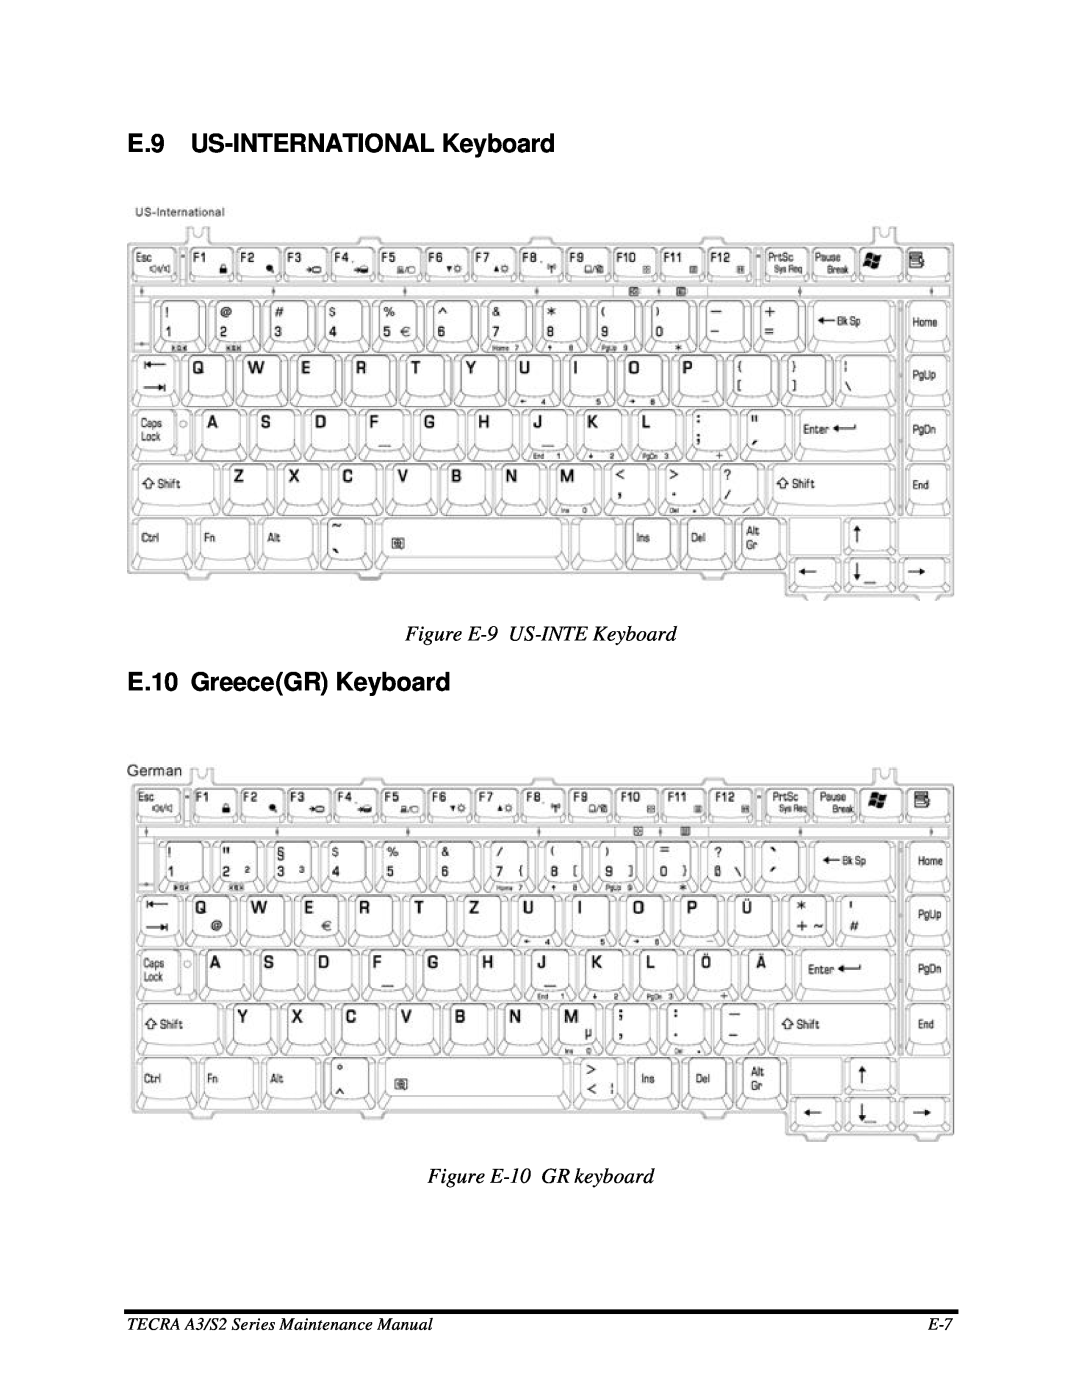 Toshiba S2 E.9 US-INTERNATIONAL Keyboard, E.10 GreeceGR Keyboard, Figure E-9 US-INTE Keyboard, Figure E-10 GR keyboard 